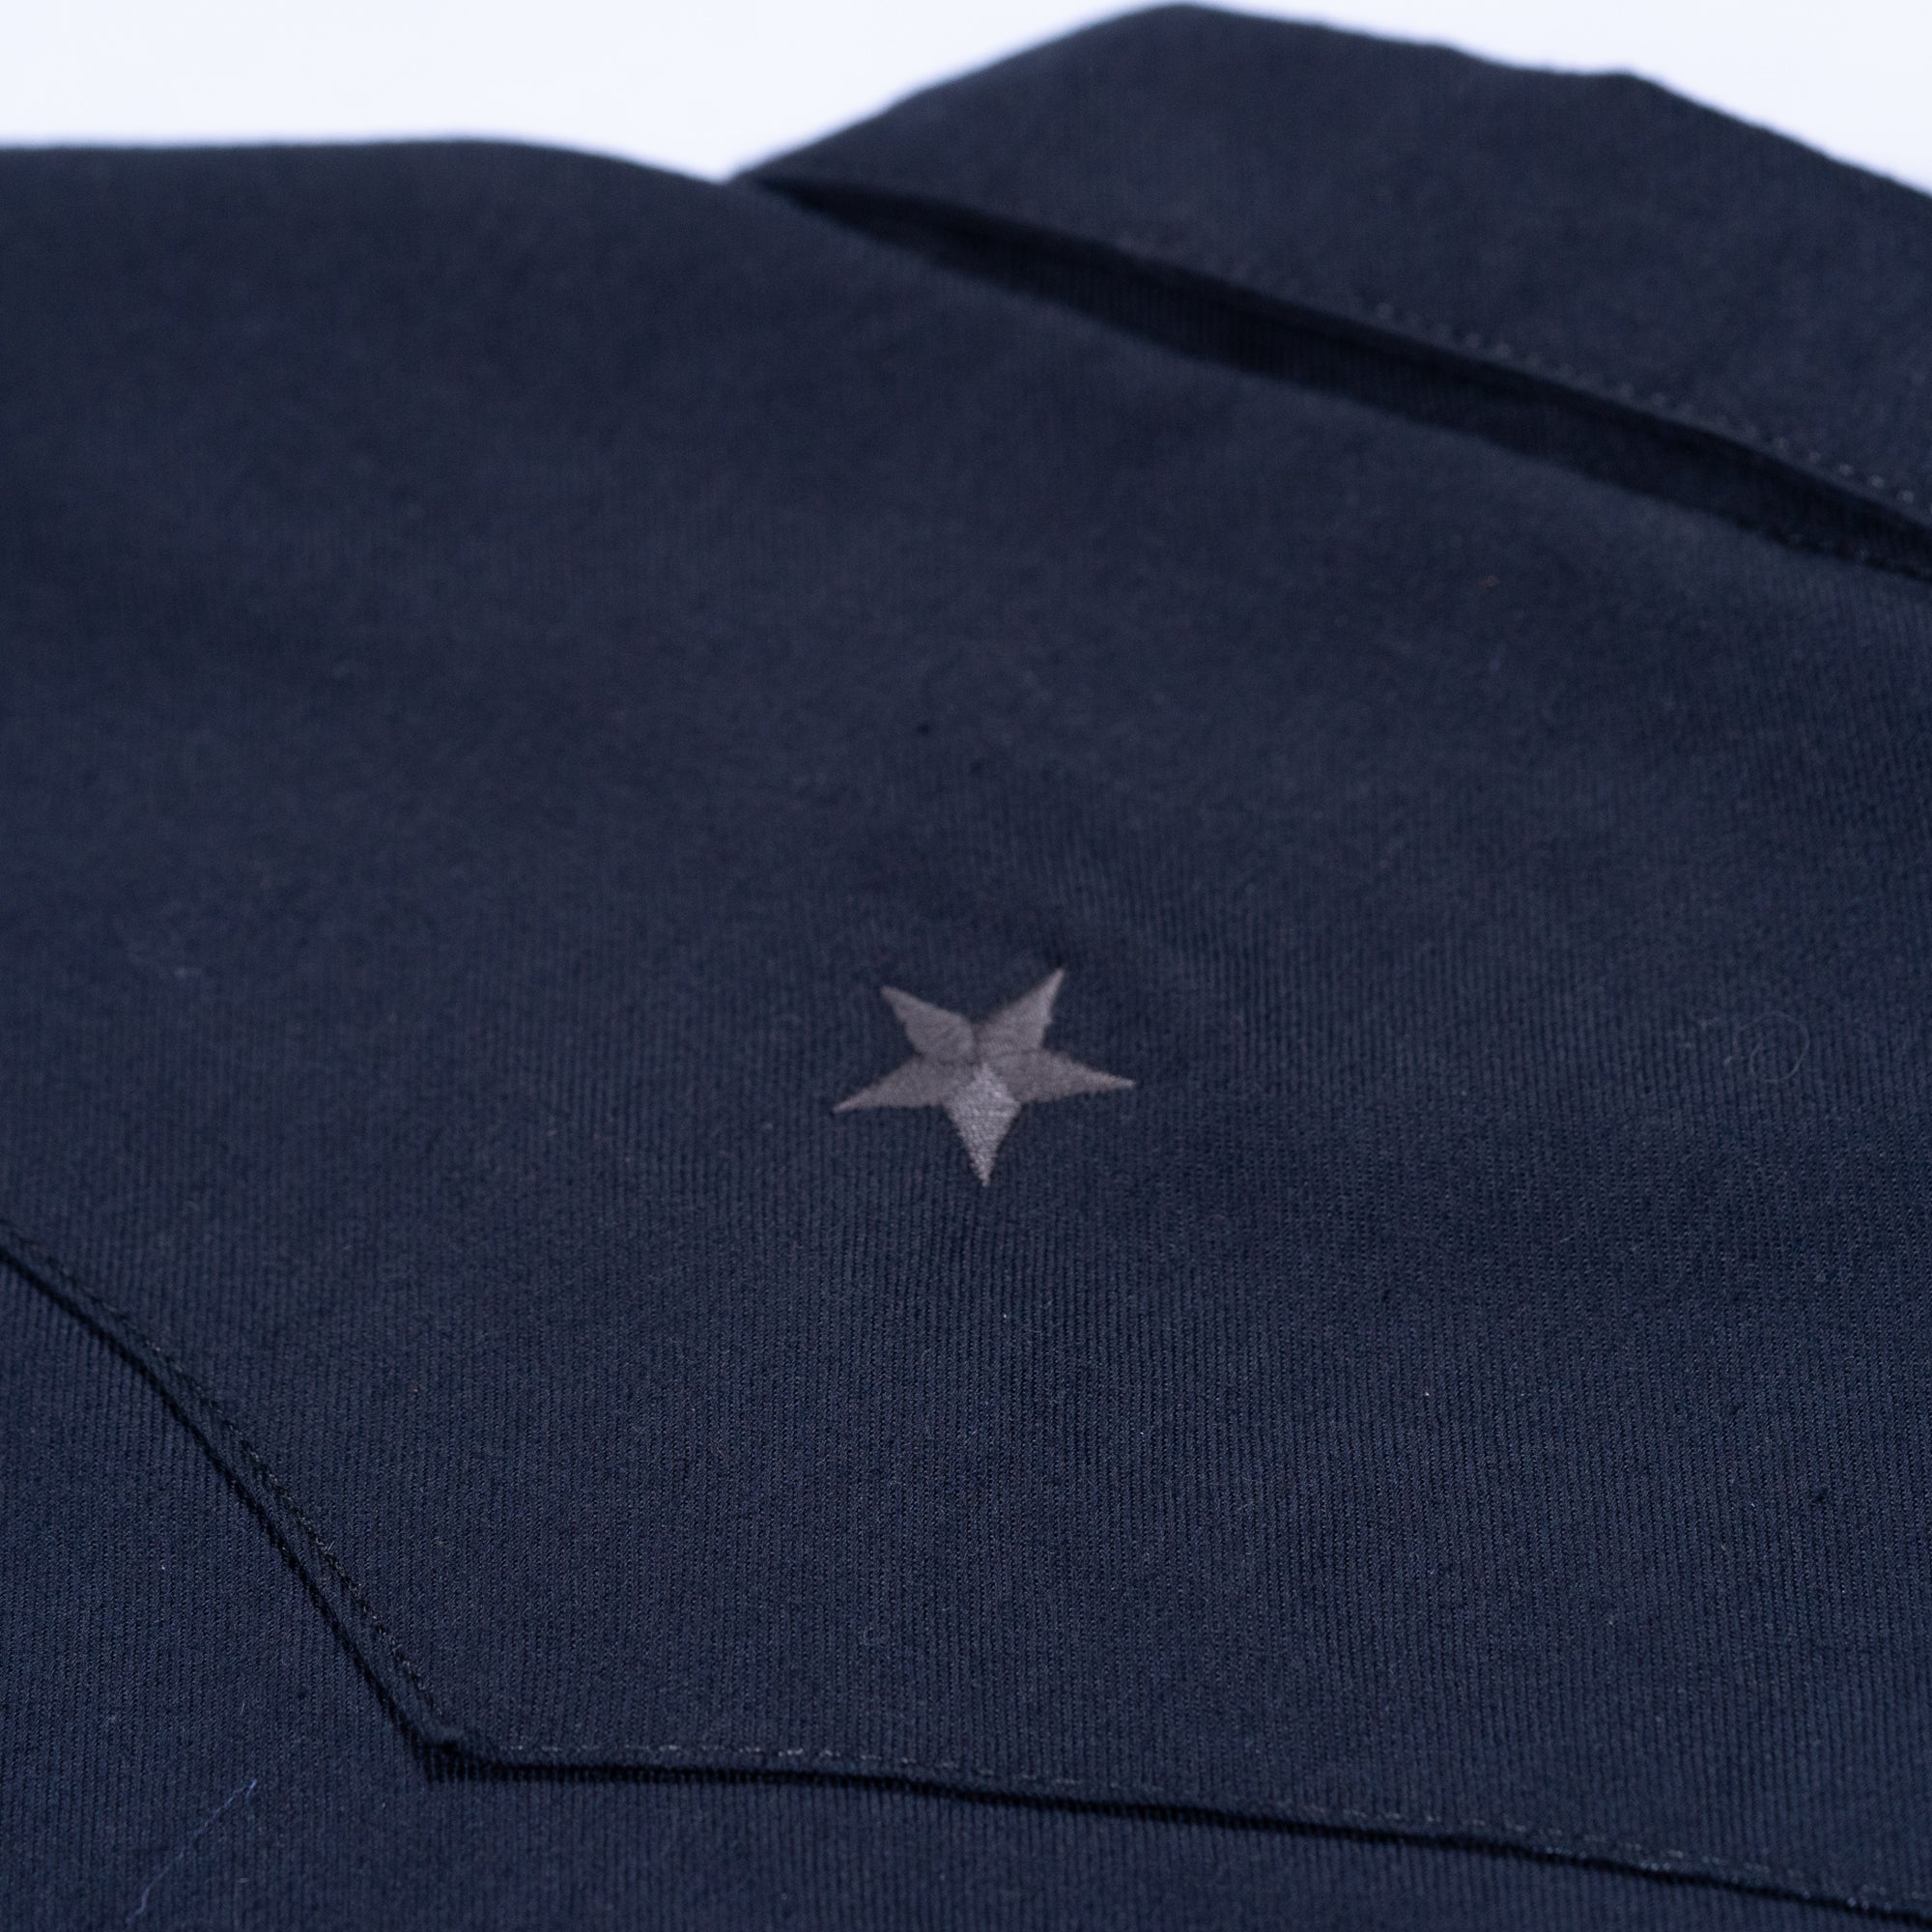 PRE ORDER: Deputy CPO Shirt 6.5oz Japan Wool Selvage